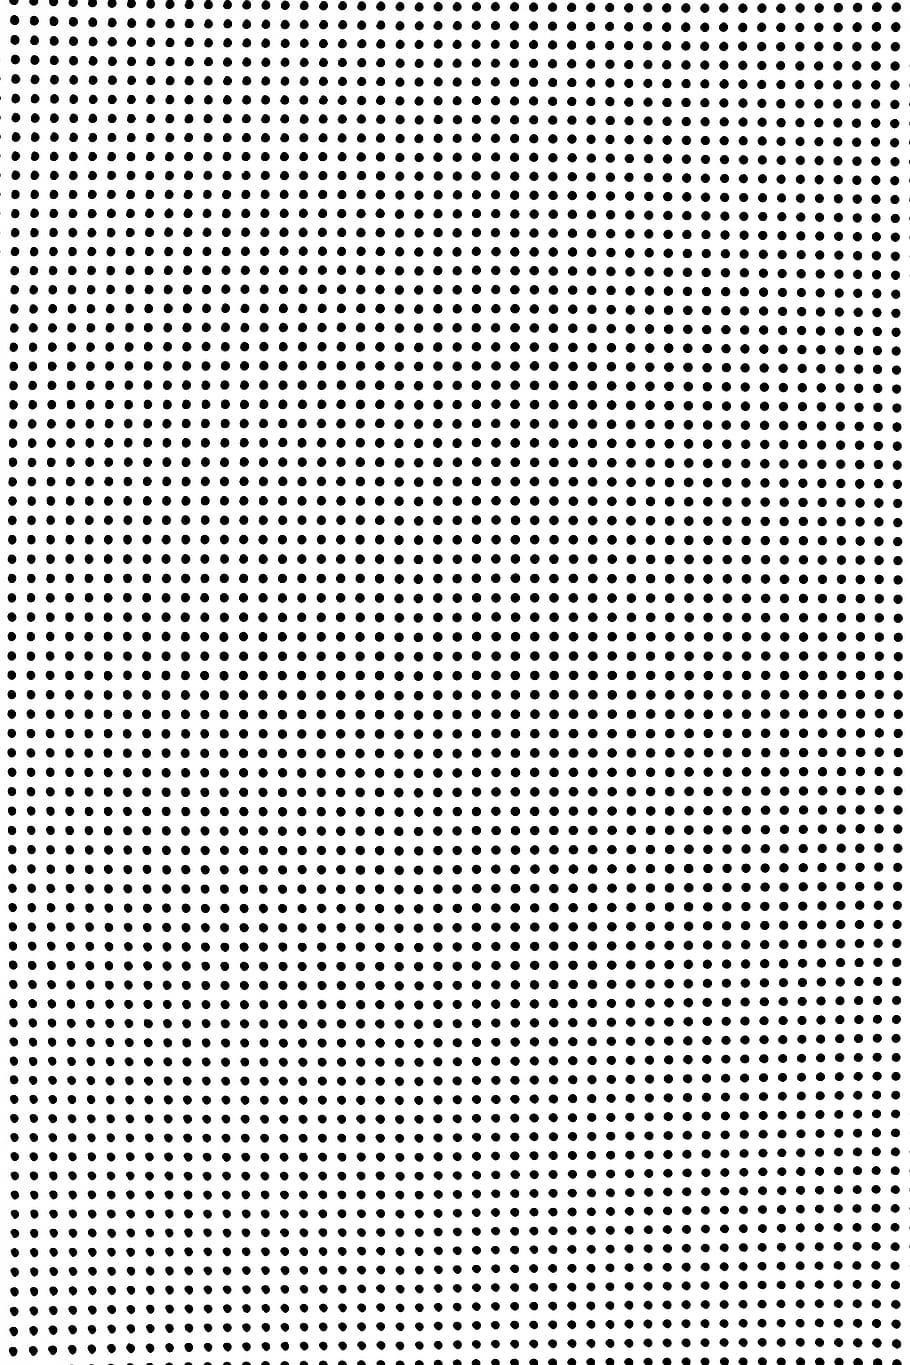 pattern, backgrounds, spotted, polka dot, hole, full frame